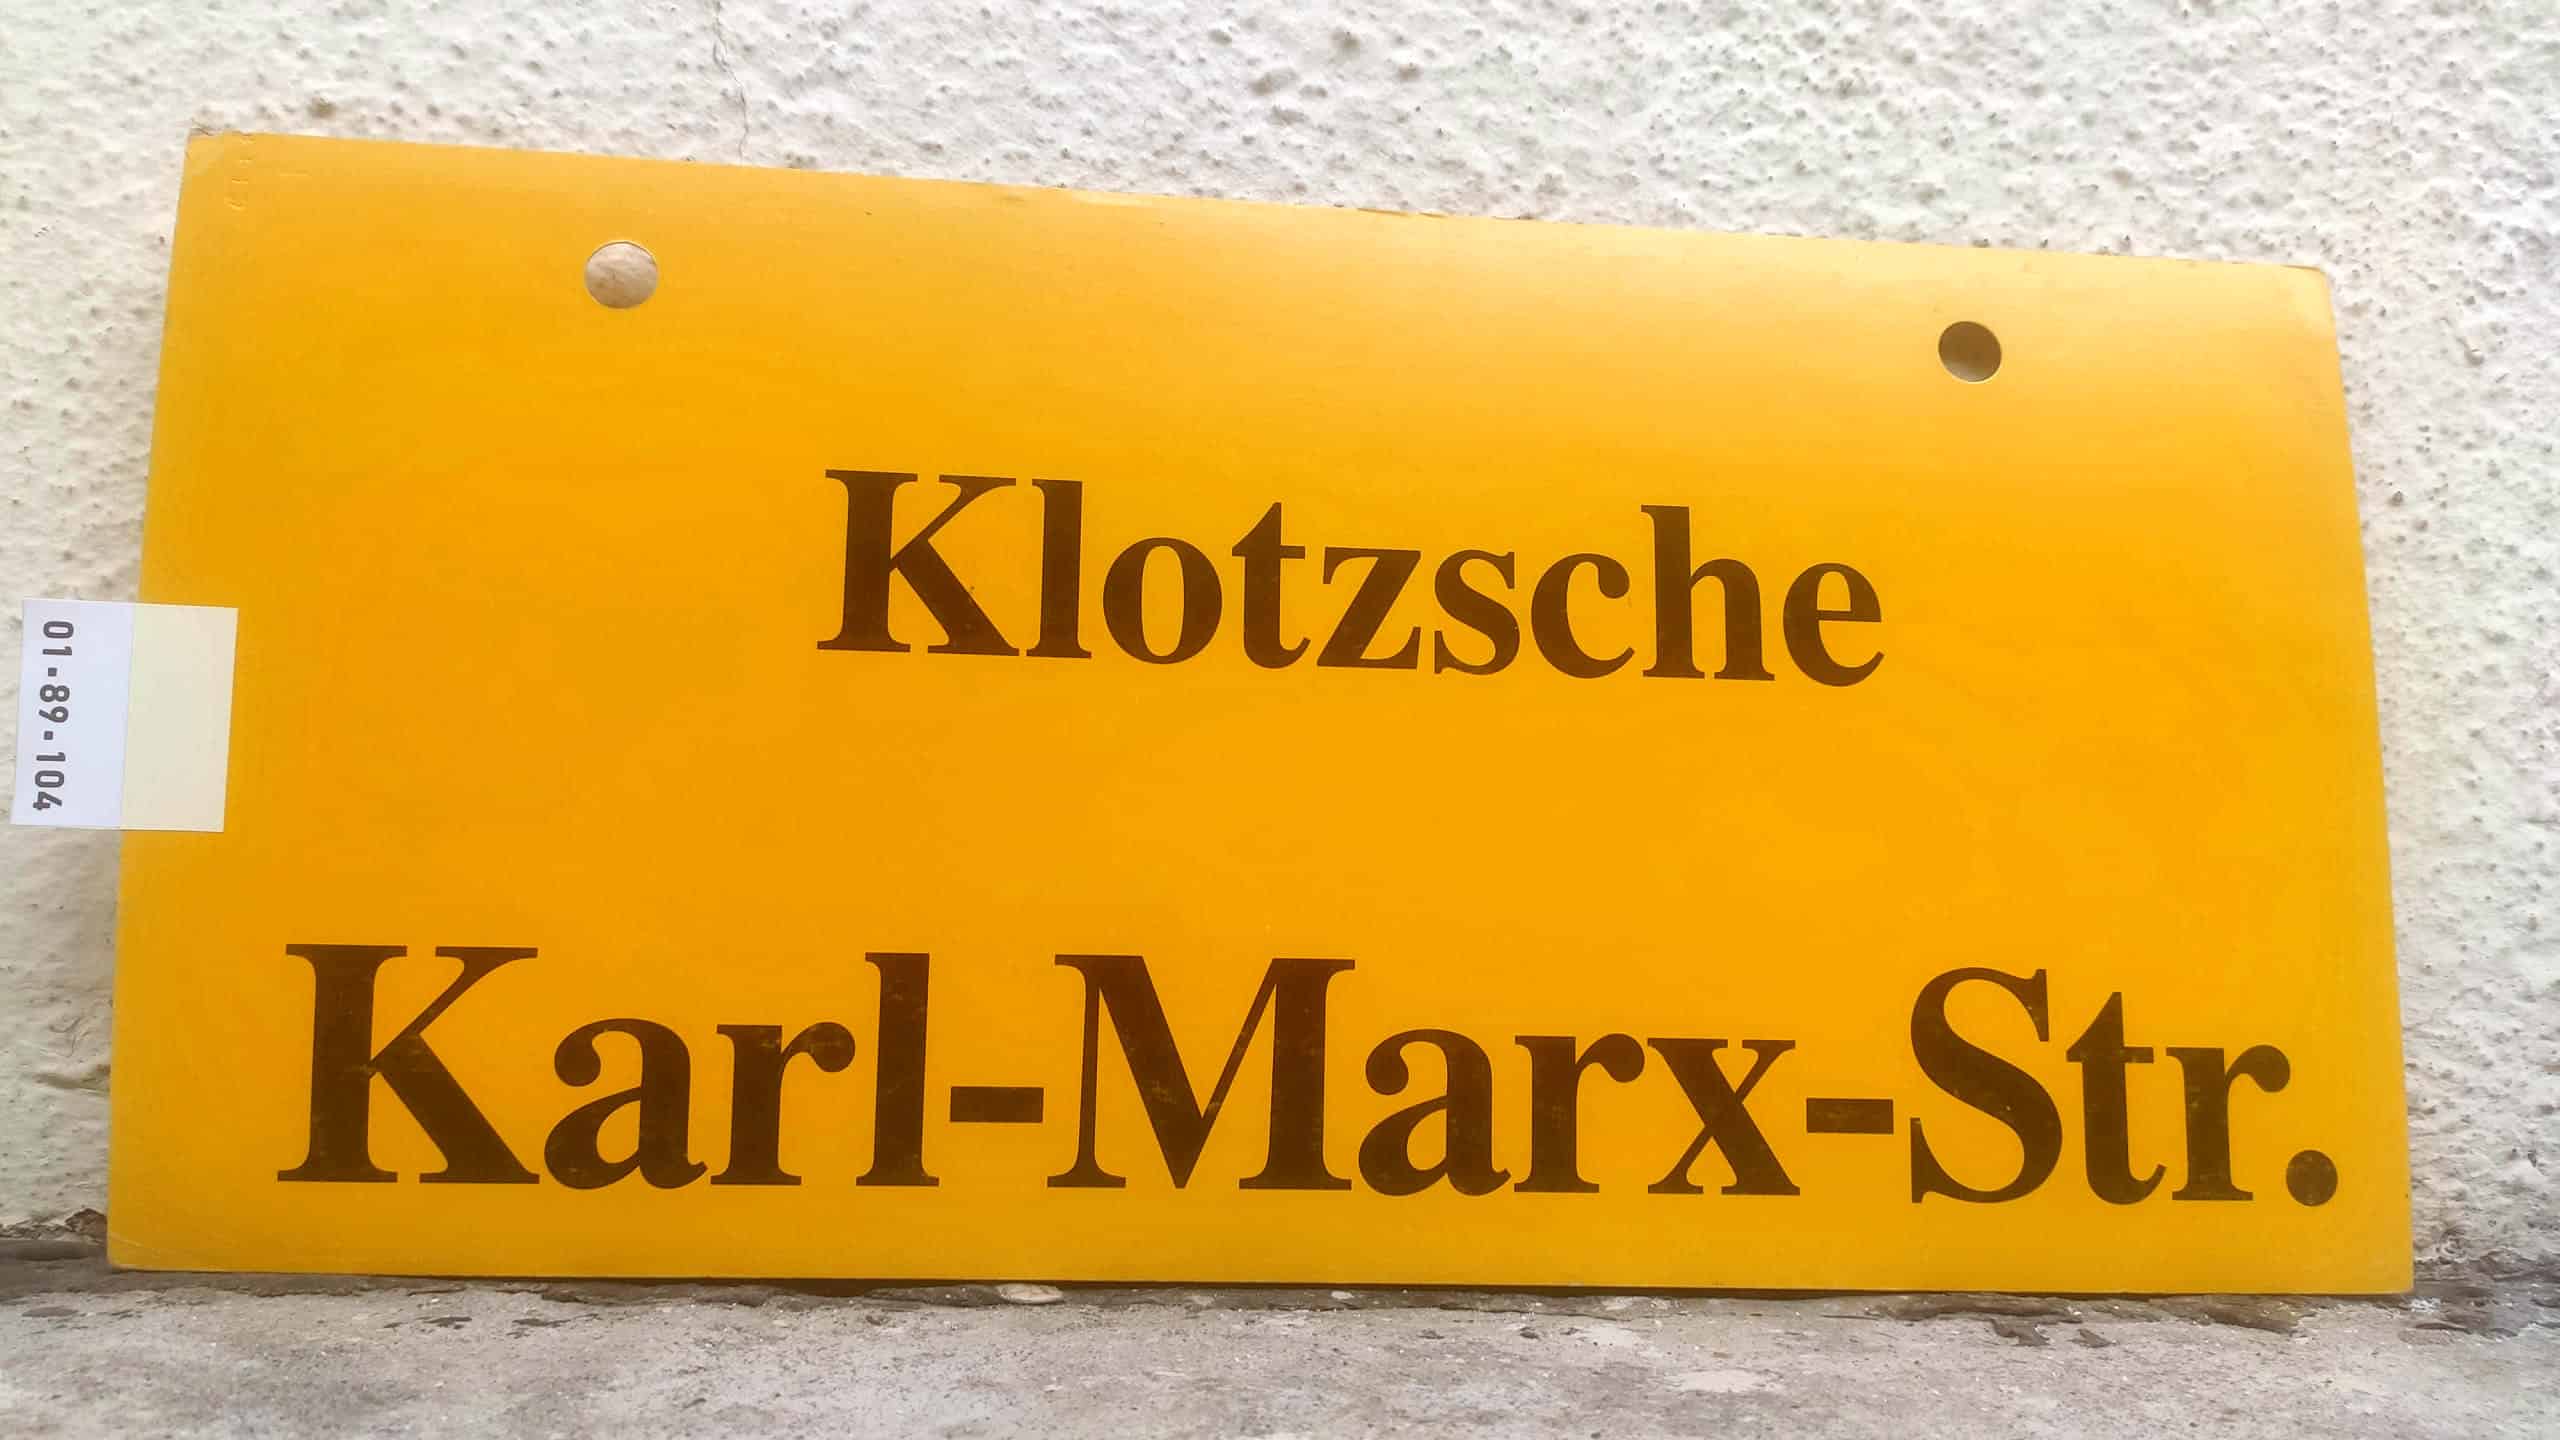 Klotzsche Karl-Marx-Straße